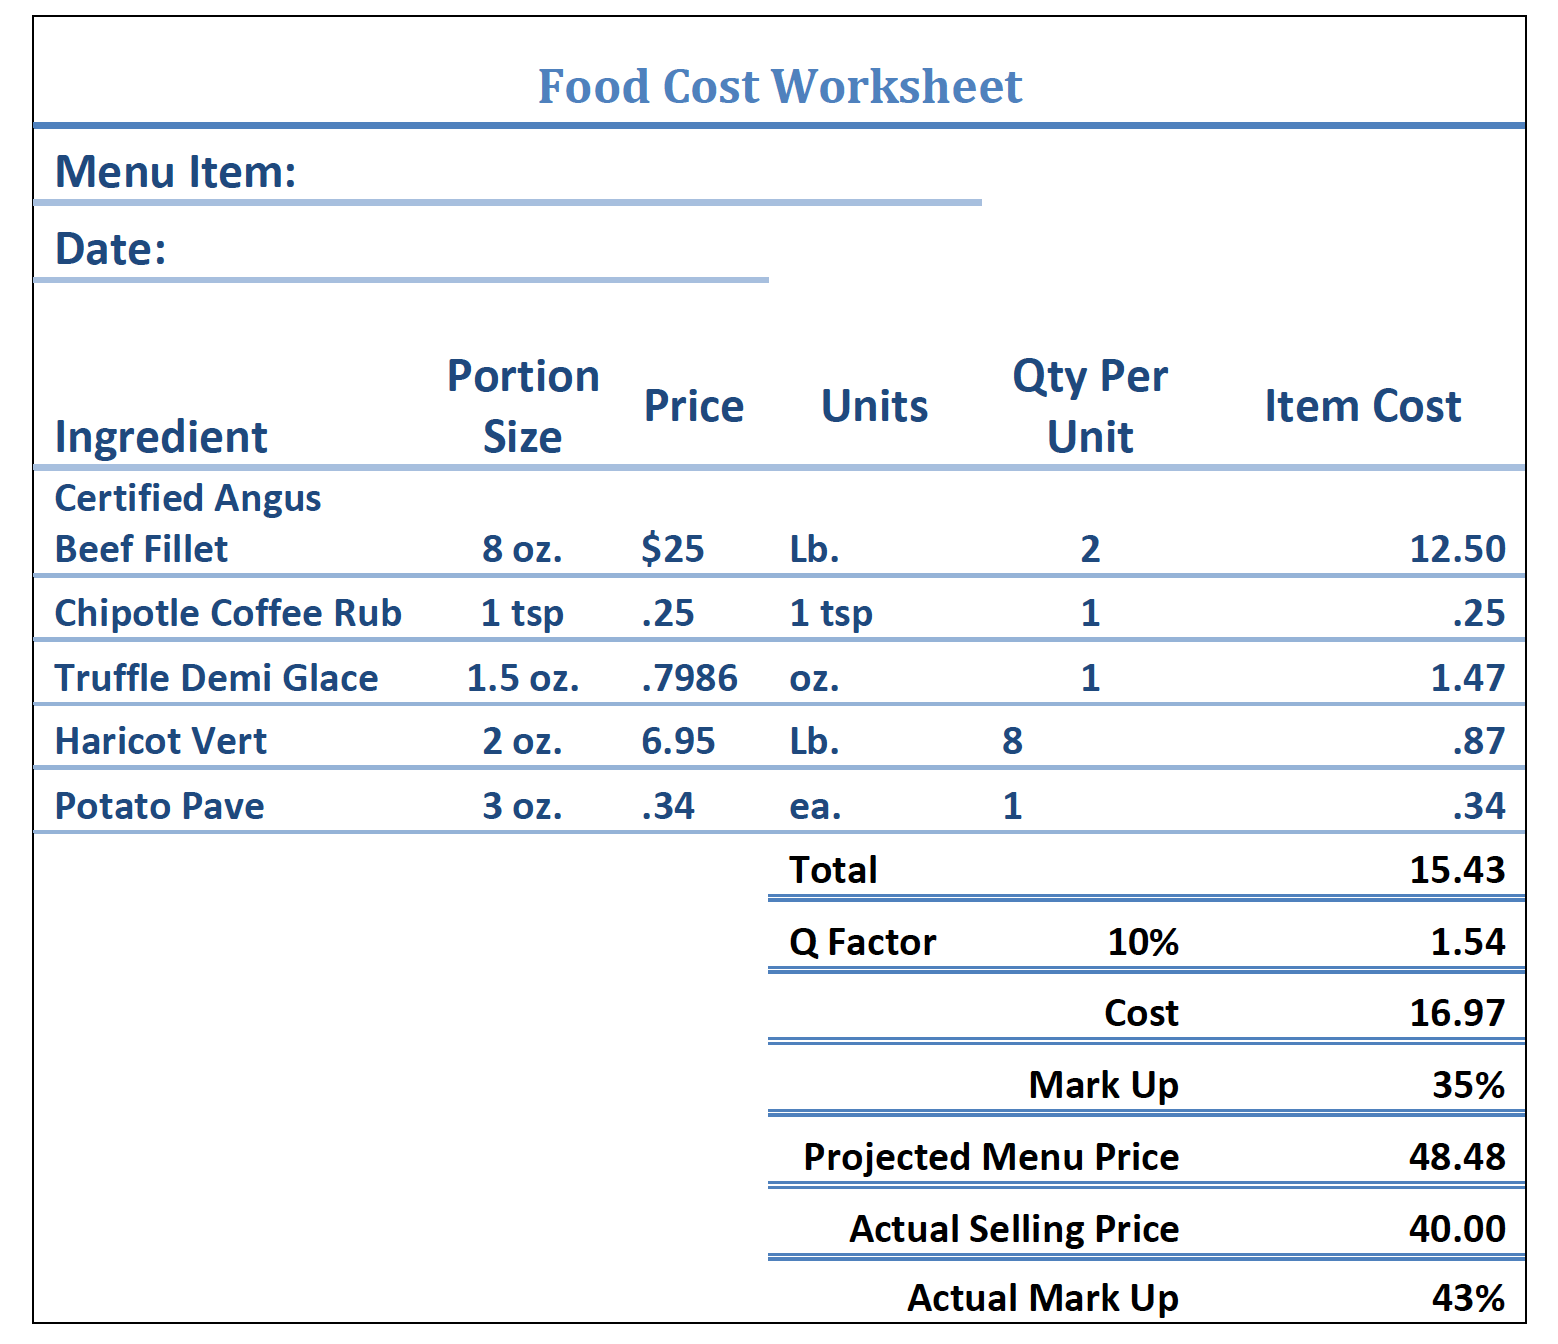 Dollar Up Worksheet, Grocery Items Under $10